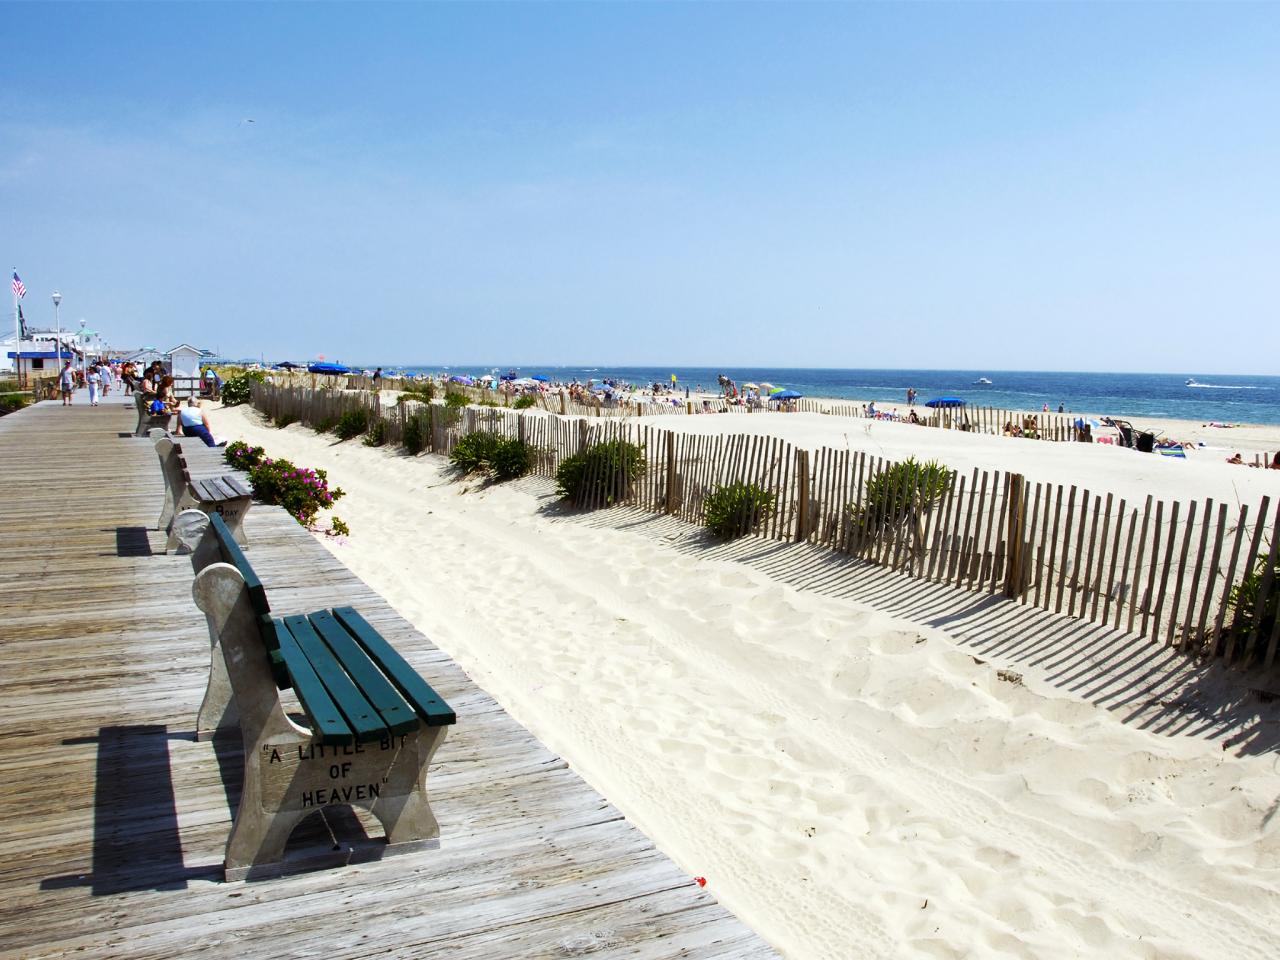 10 Best New Jersey Beaches to Visit in 2018 - Top Boardwalks